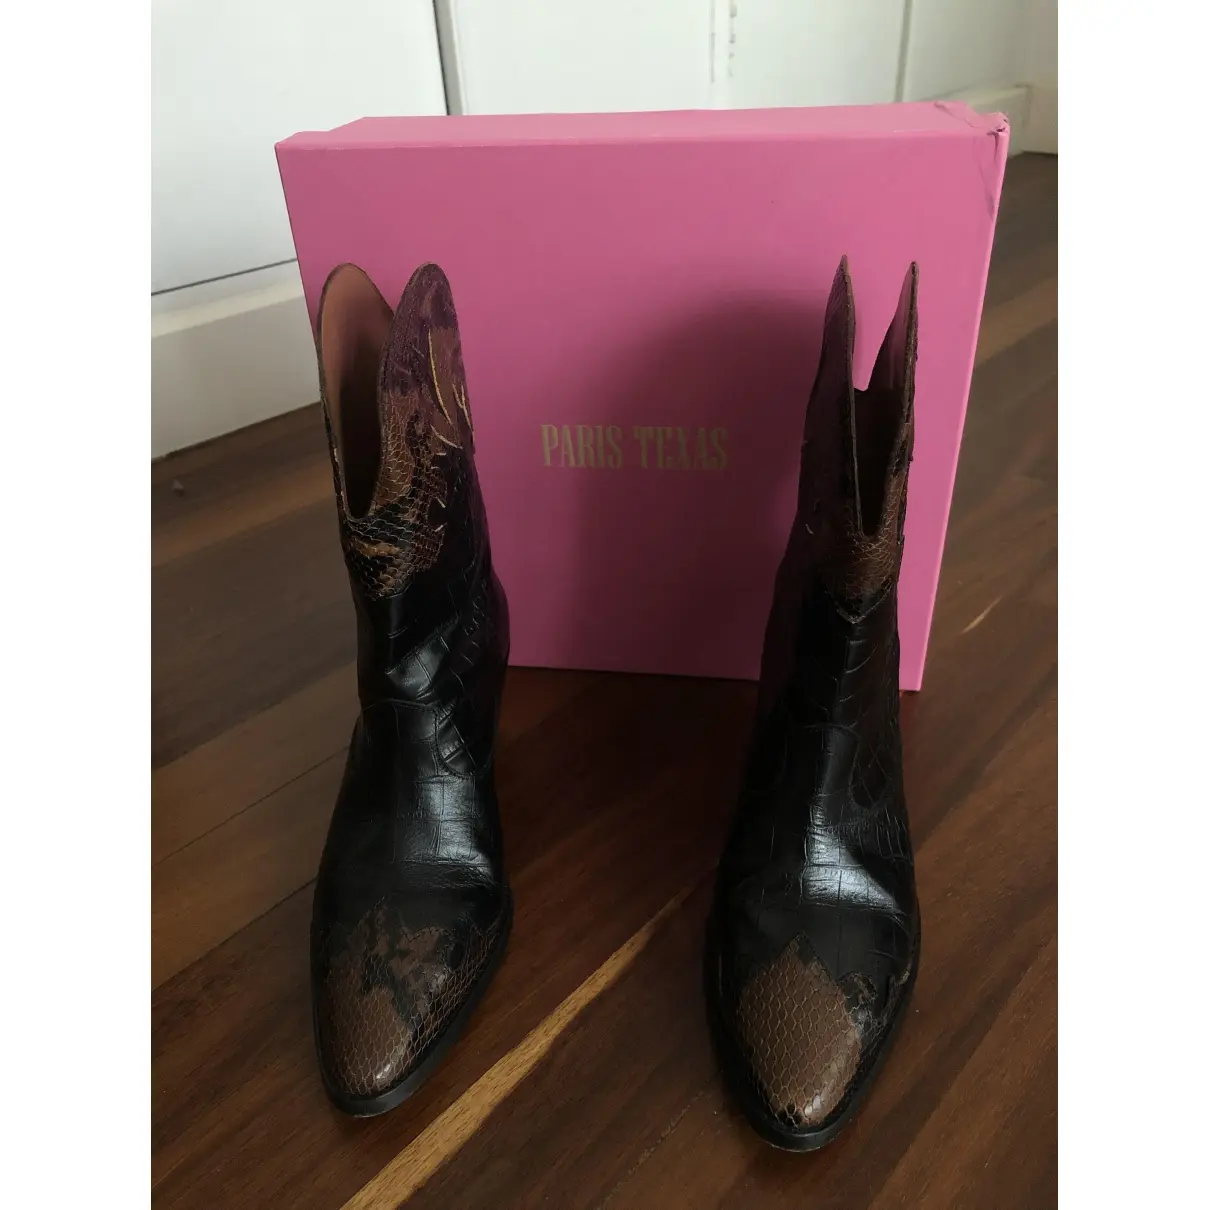 Buy PARIS TEXAS Leather ankle boots online